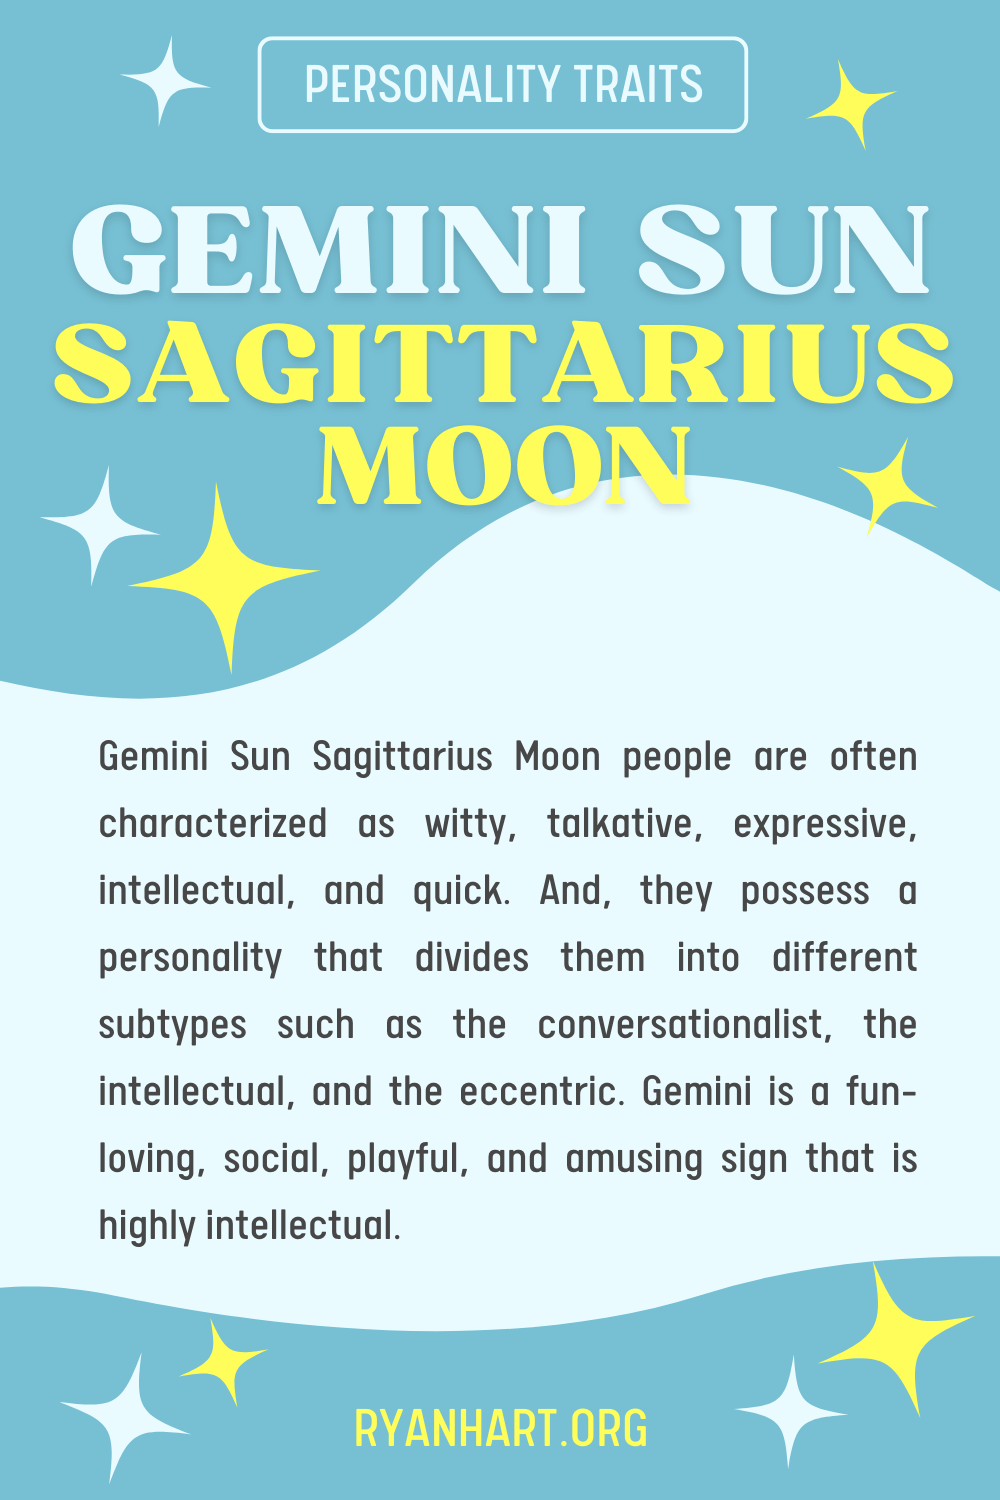 Gemini Sun Sagittarius Moon Description